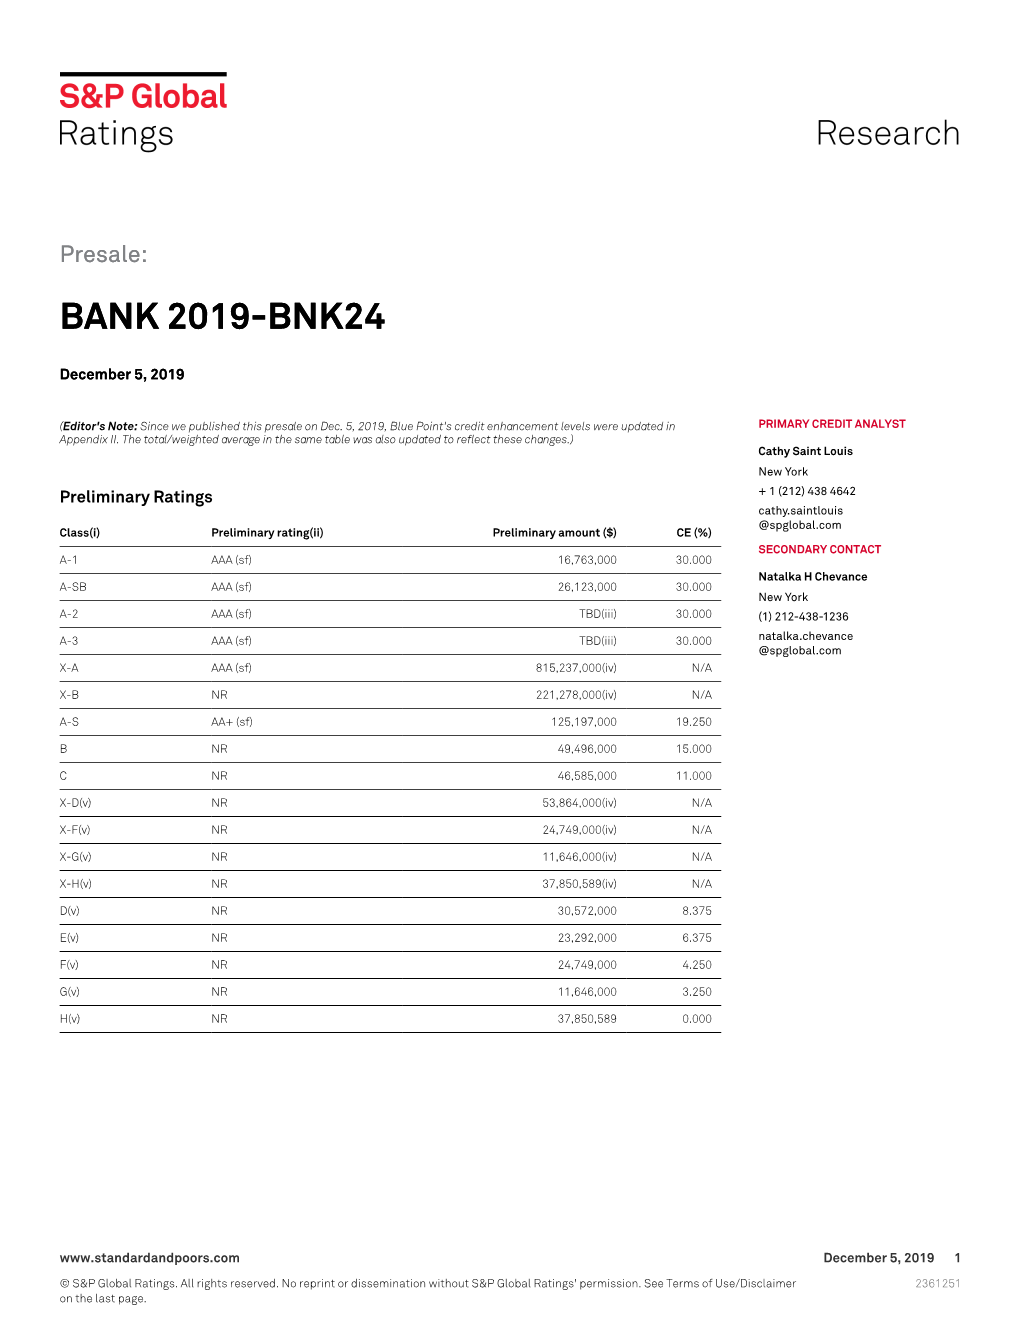 Bank 2019-Bnk24